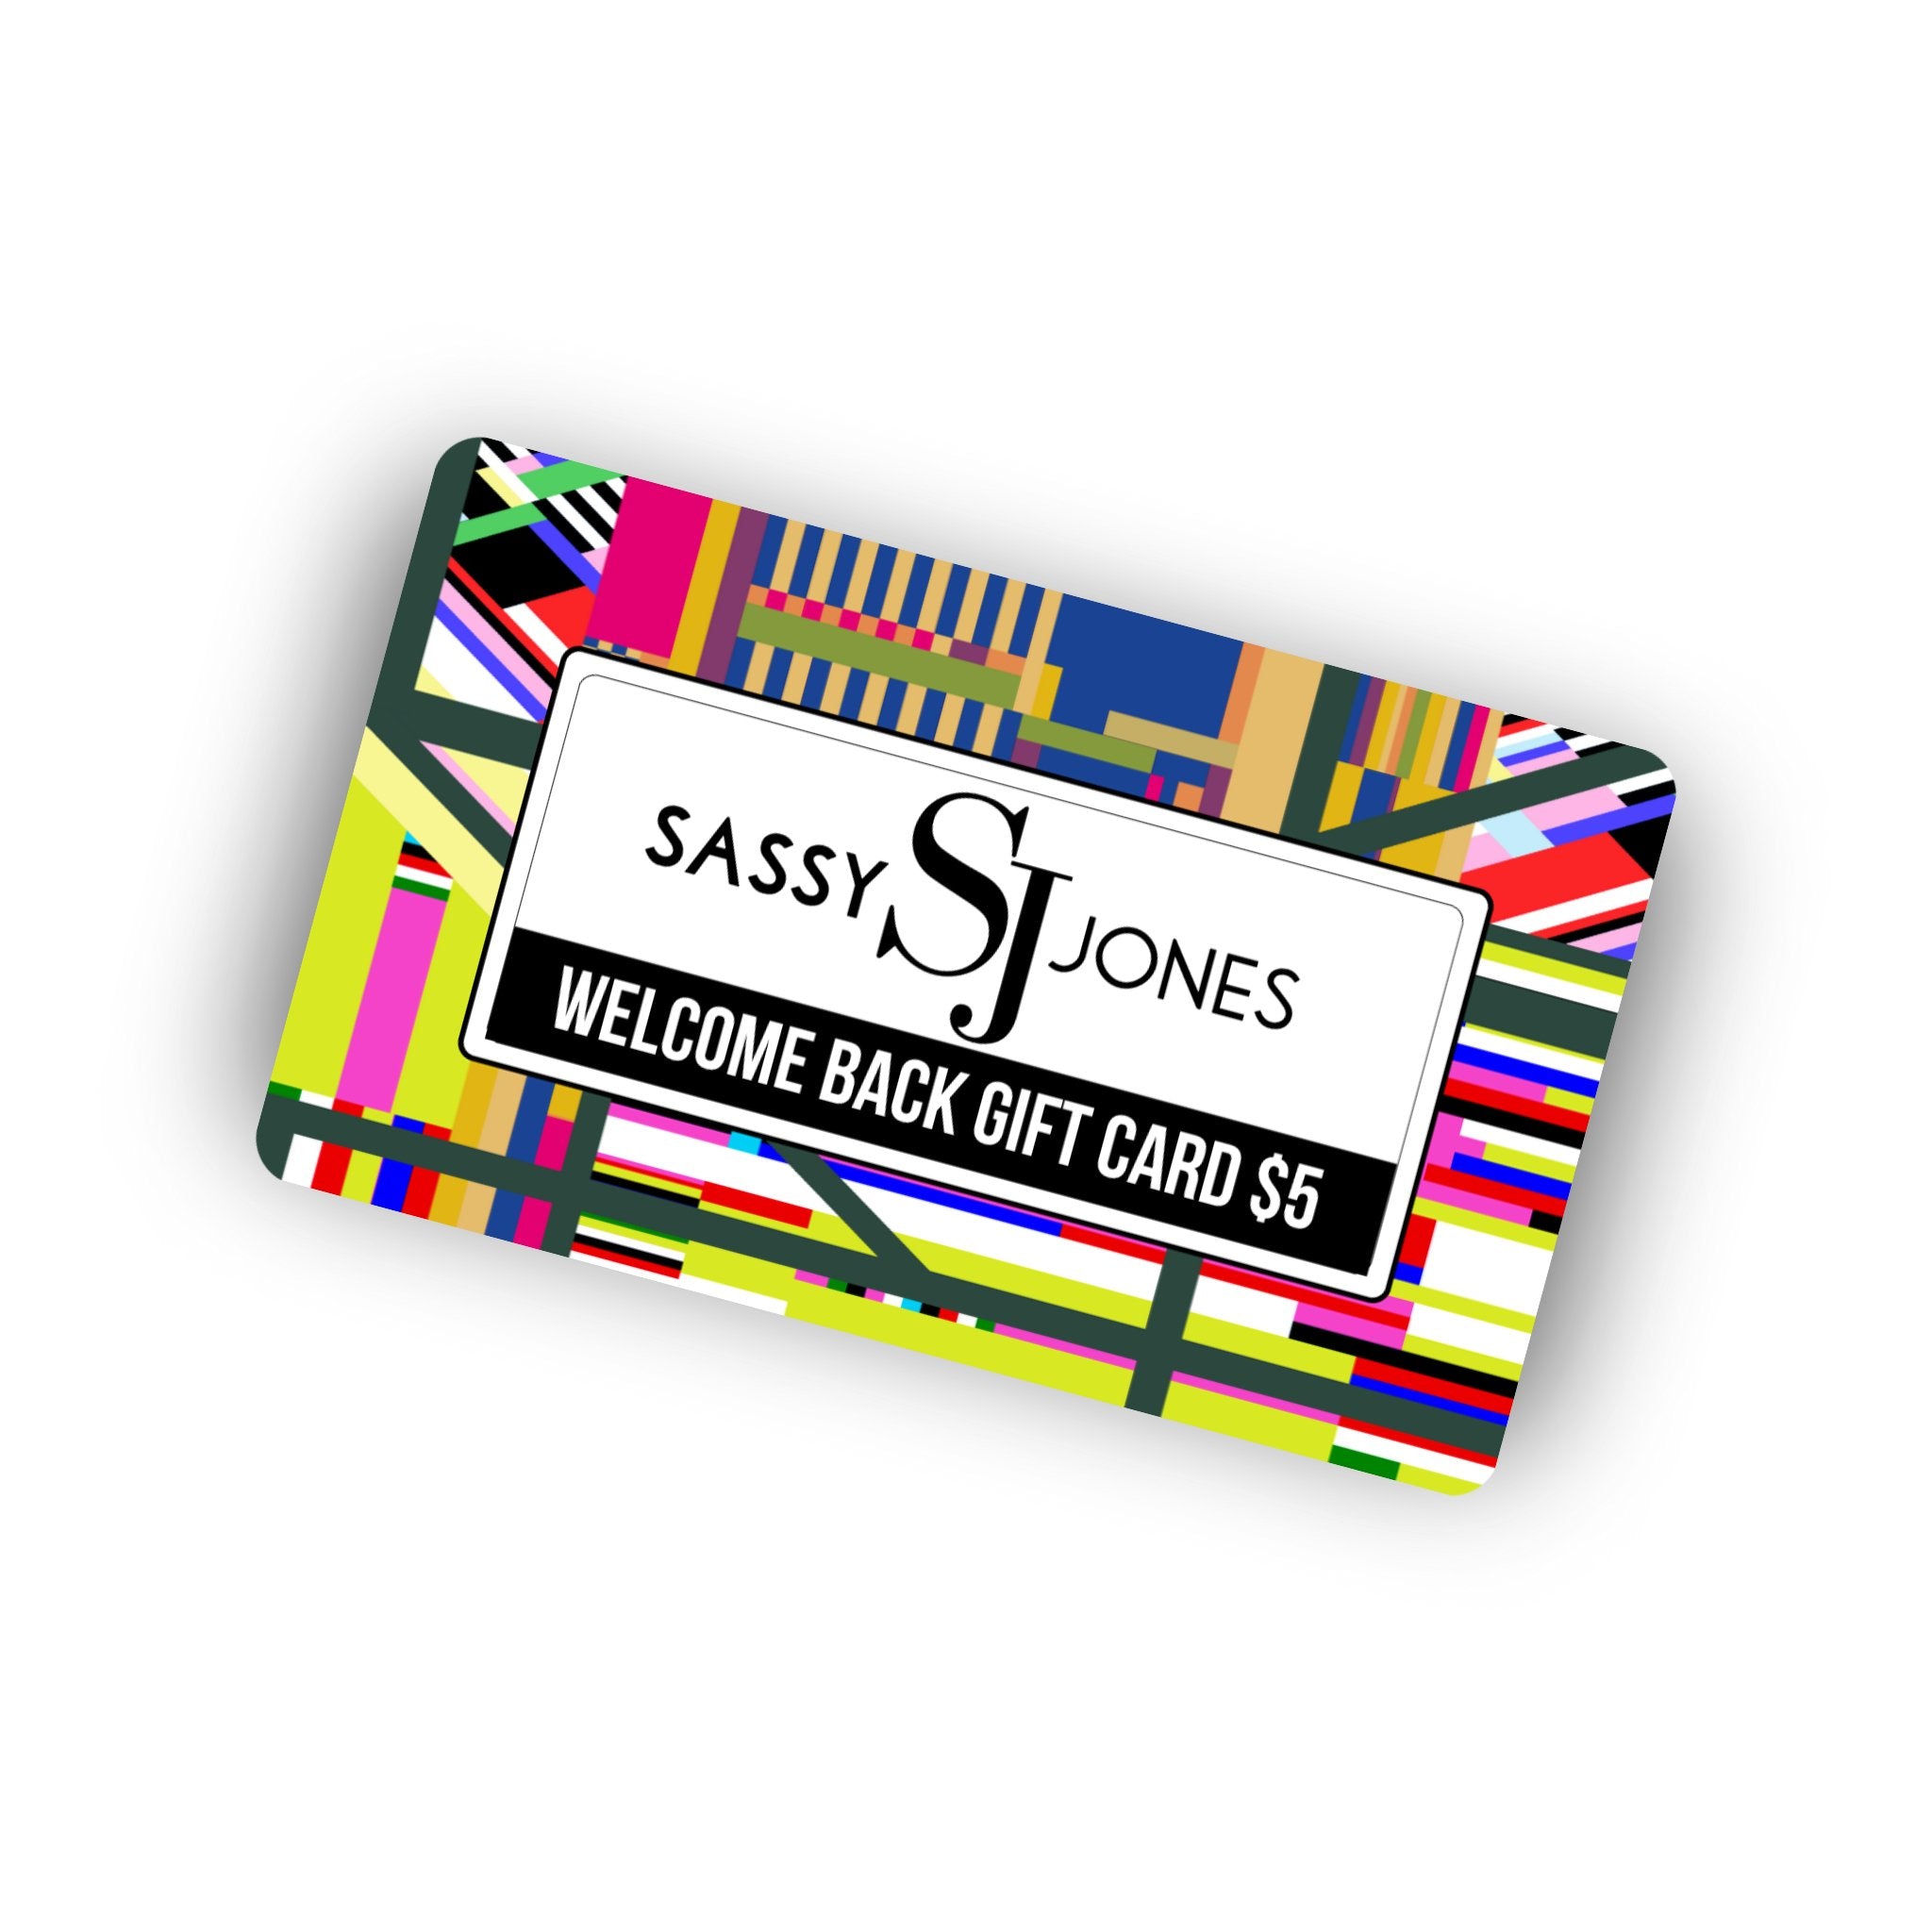 Welcome Back Gift Card! - Sassy Jones